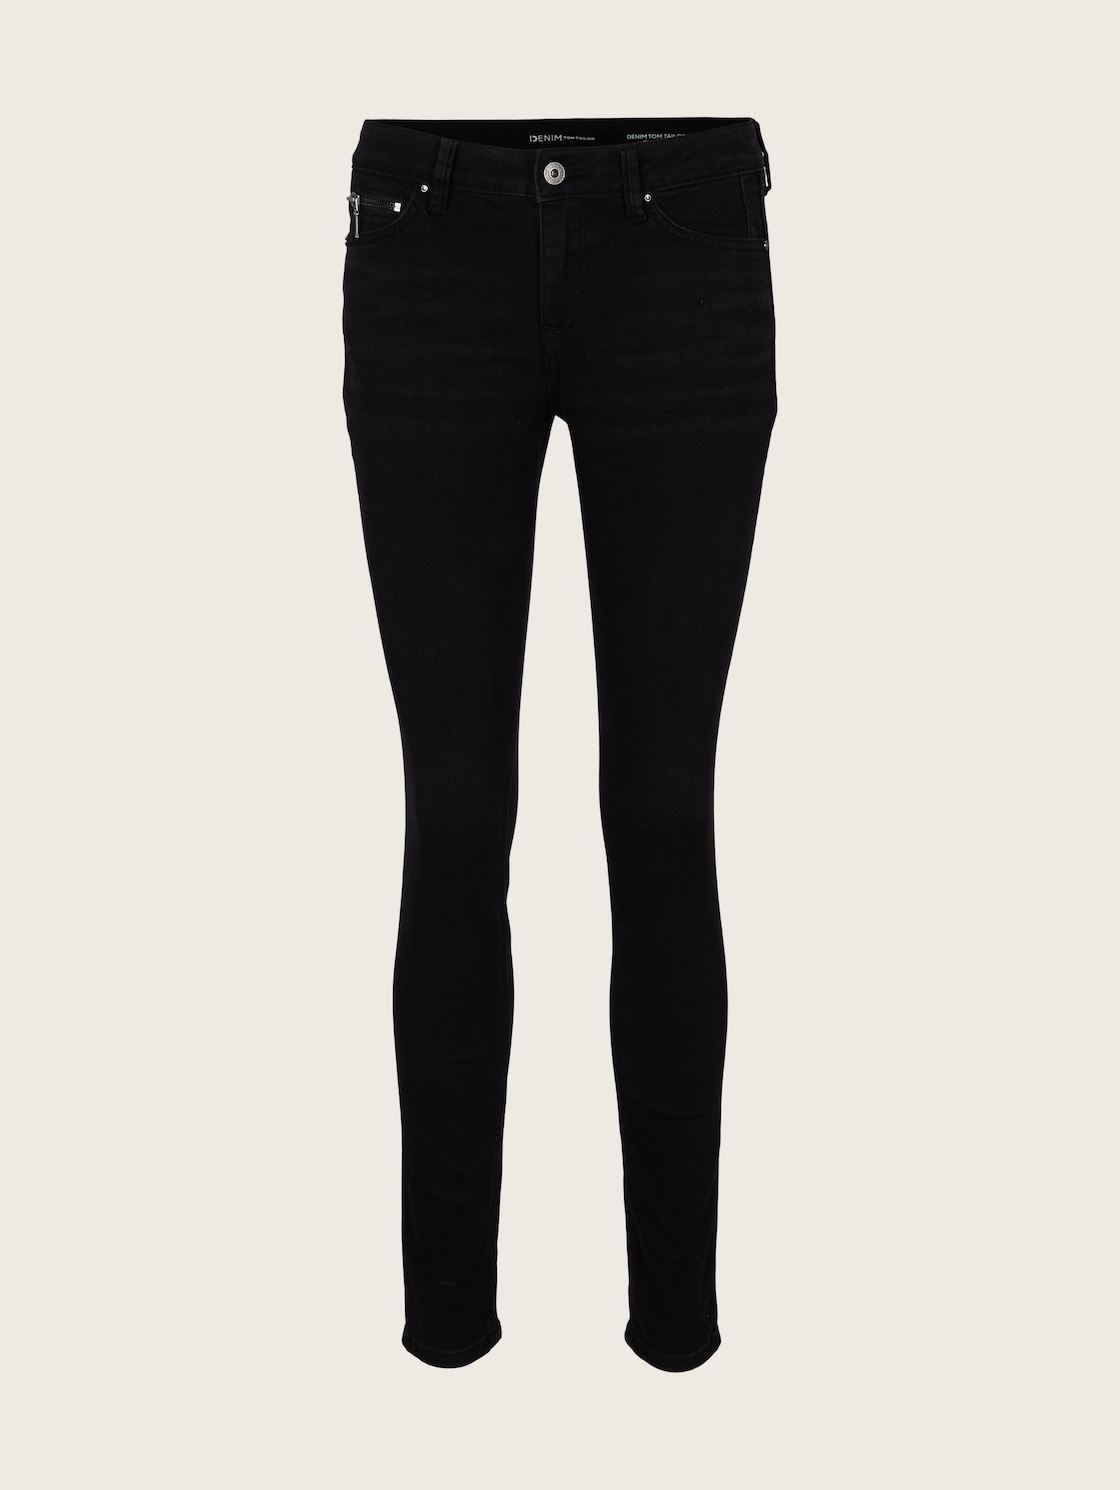 TOM TAILOR DENIM Damen Jona Extra Skinny Jeans mit recyceltem Polyester, schwarz, Uni, Gr. 28/34 von Tom Tailor Denim